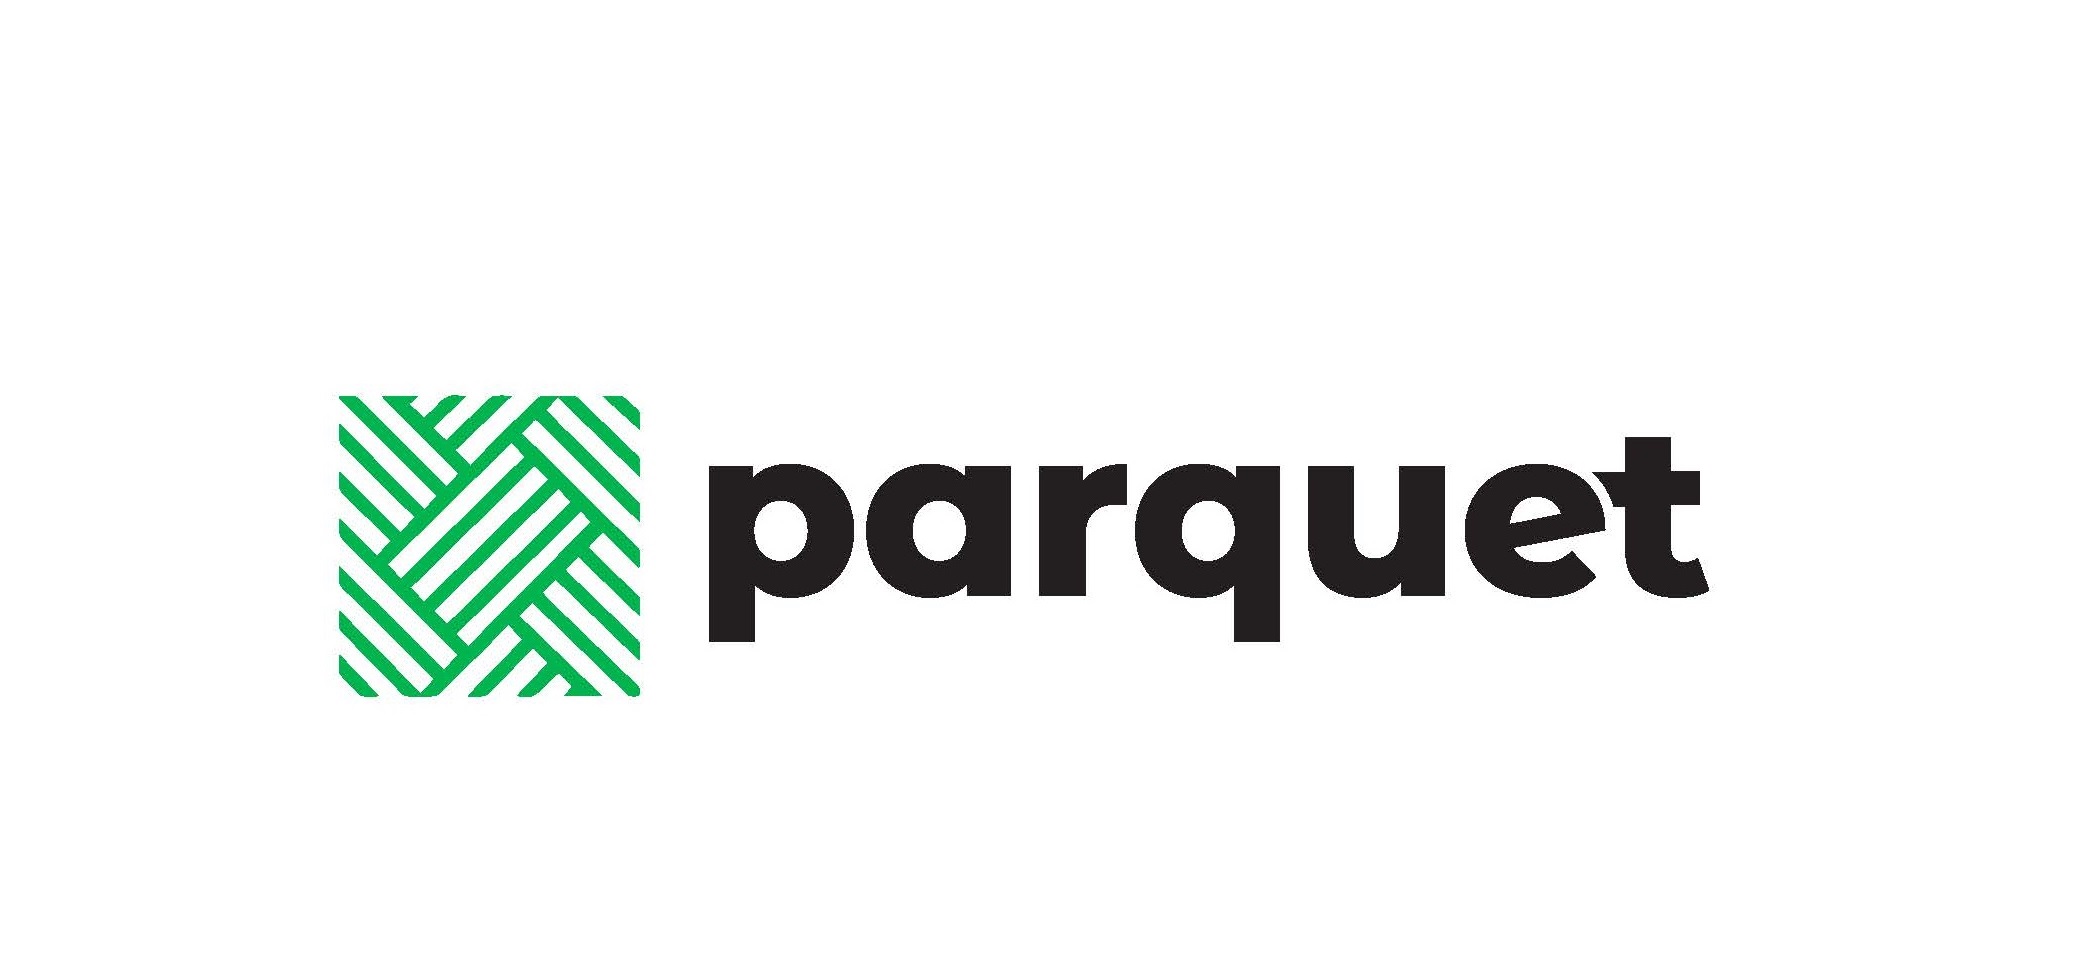 Parquet Capital Logo